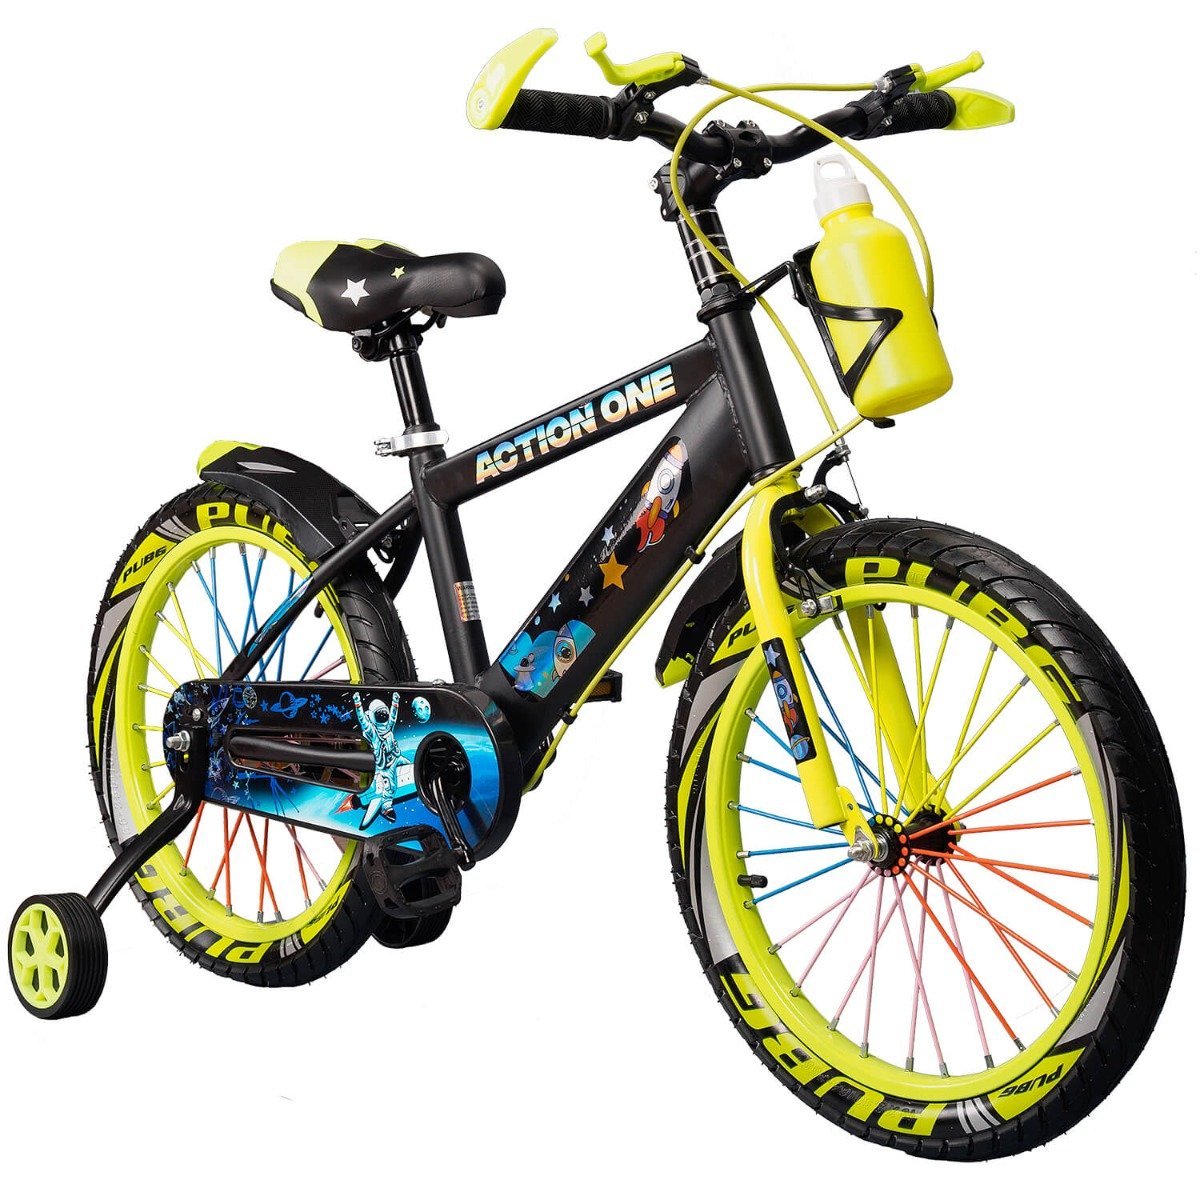 Bicicleta cu roti ajutatoare si bidon pentru apa Nova II, Action One, 18 inch, Verde